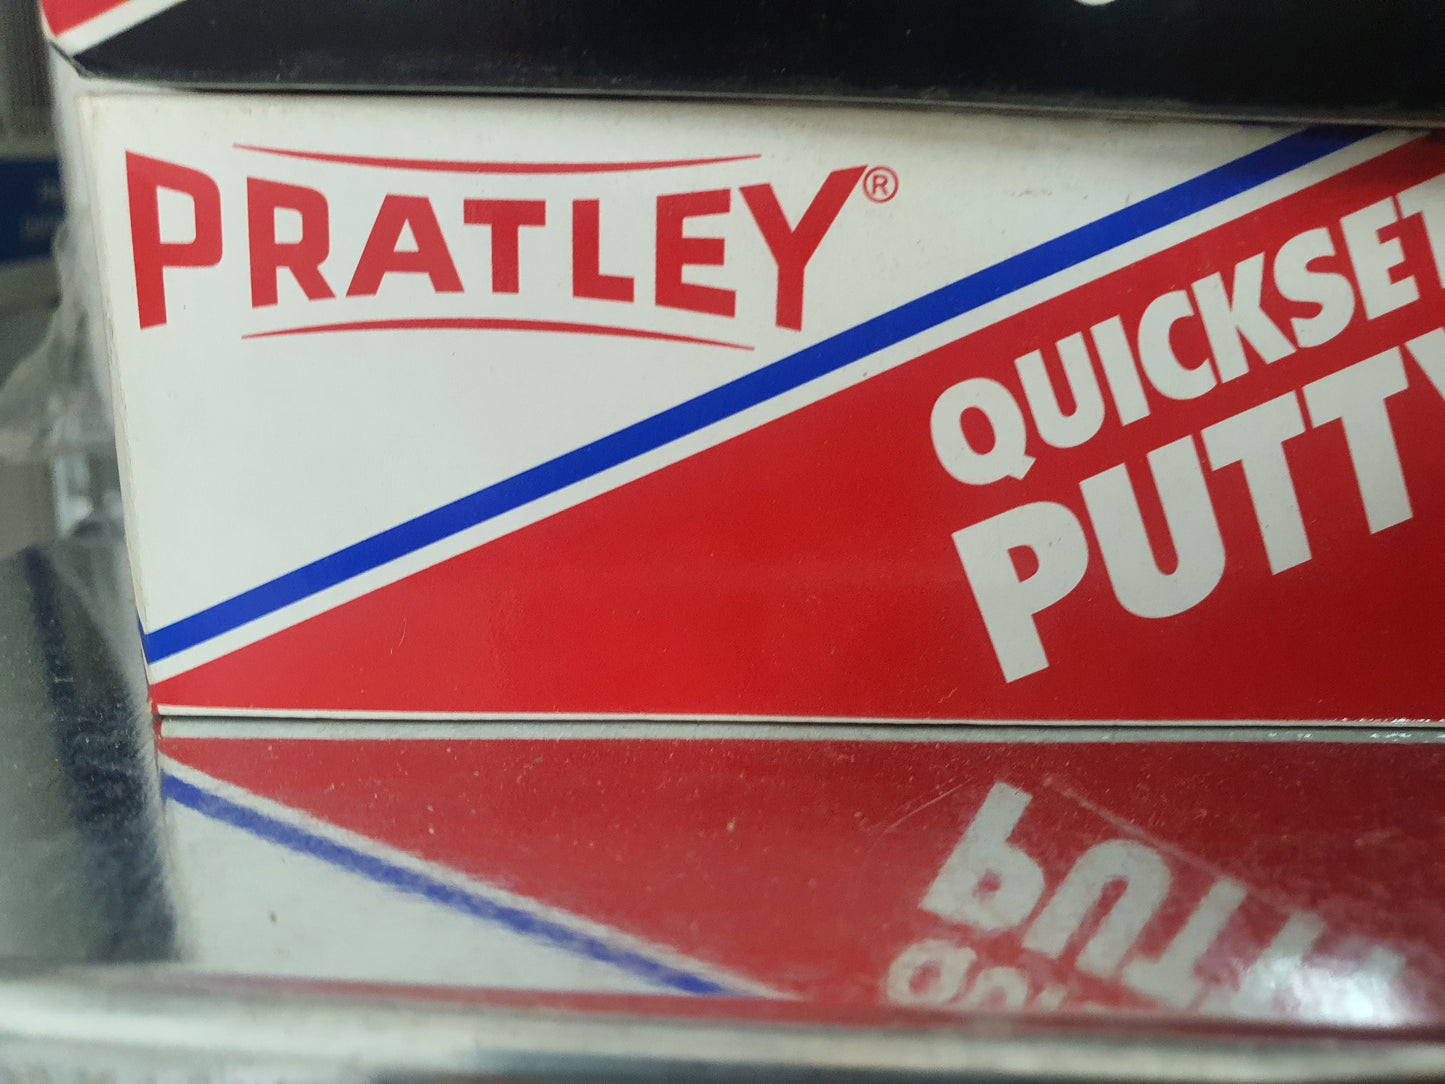 Pratley putty quick set